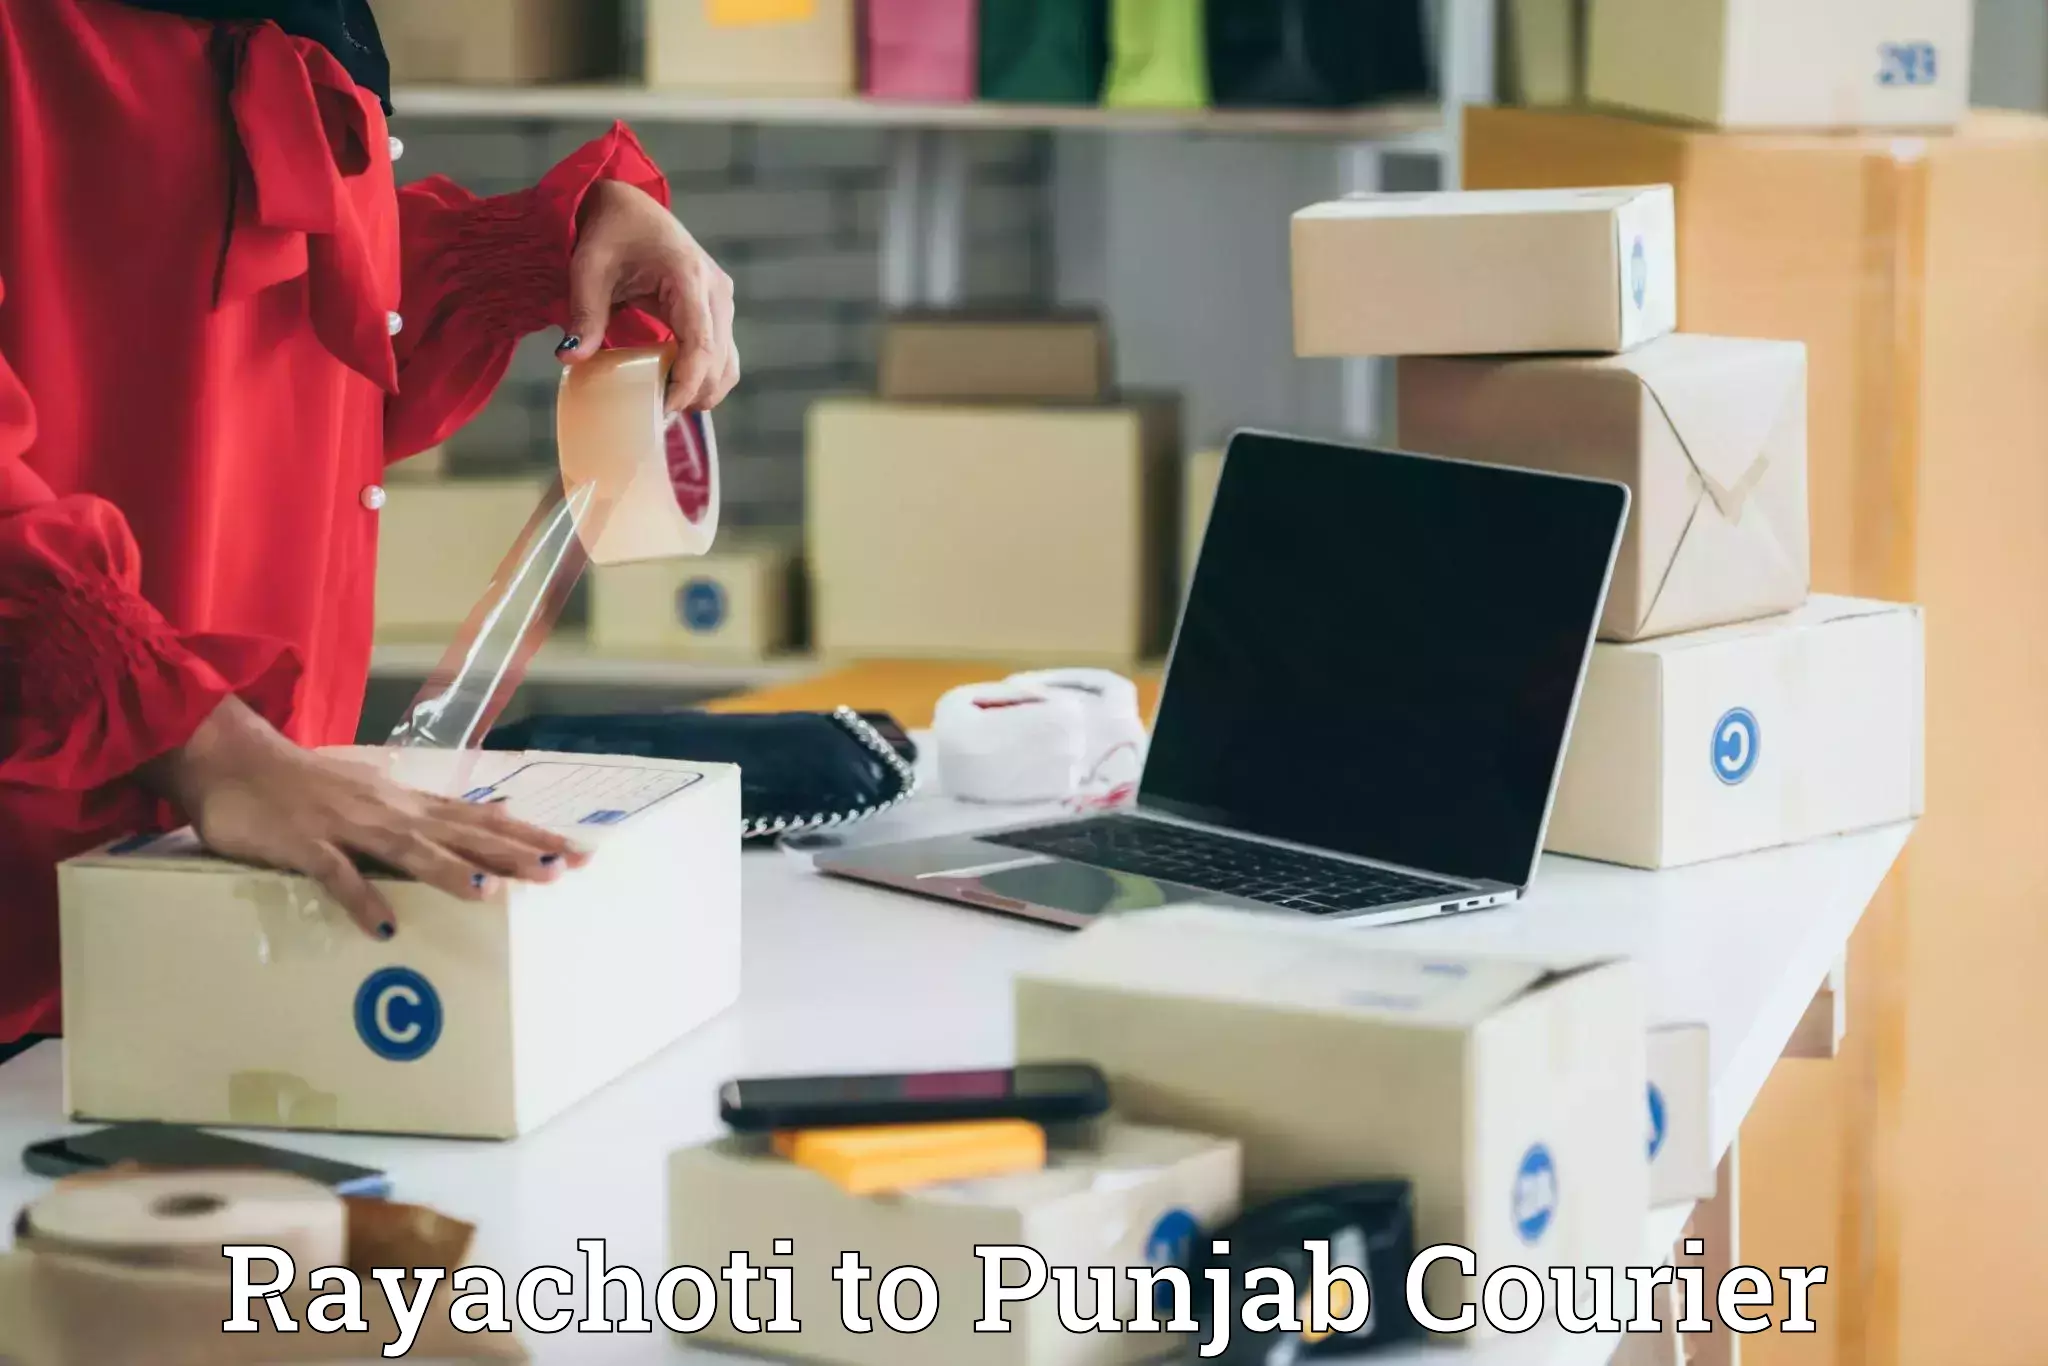 Luggage transport consultancy Rayachoti to Punjab